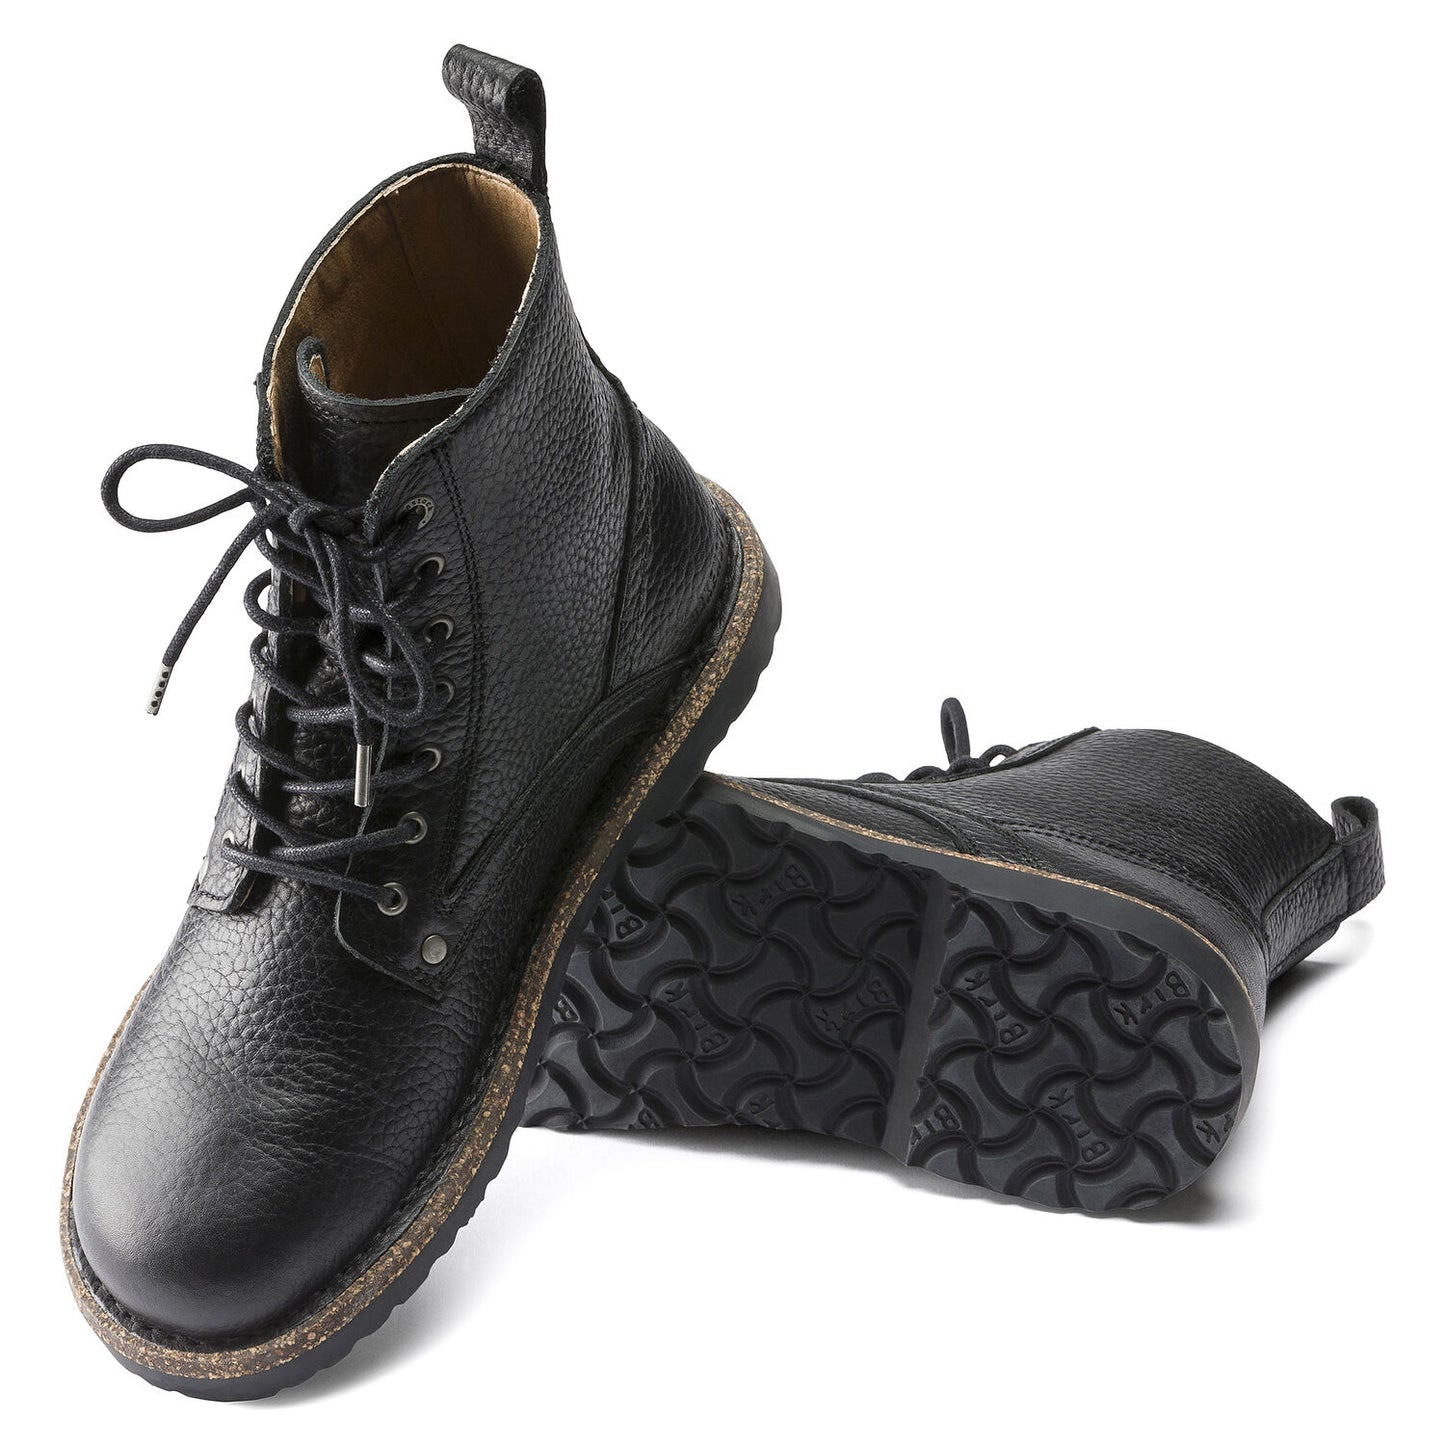 Birkenstock Women's Bryson Natural Leather Boots Black